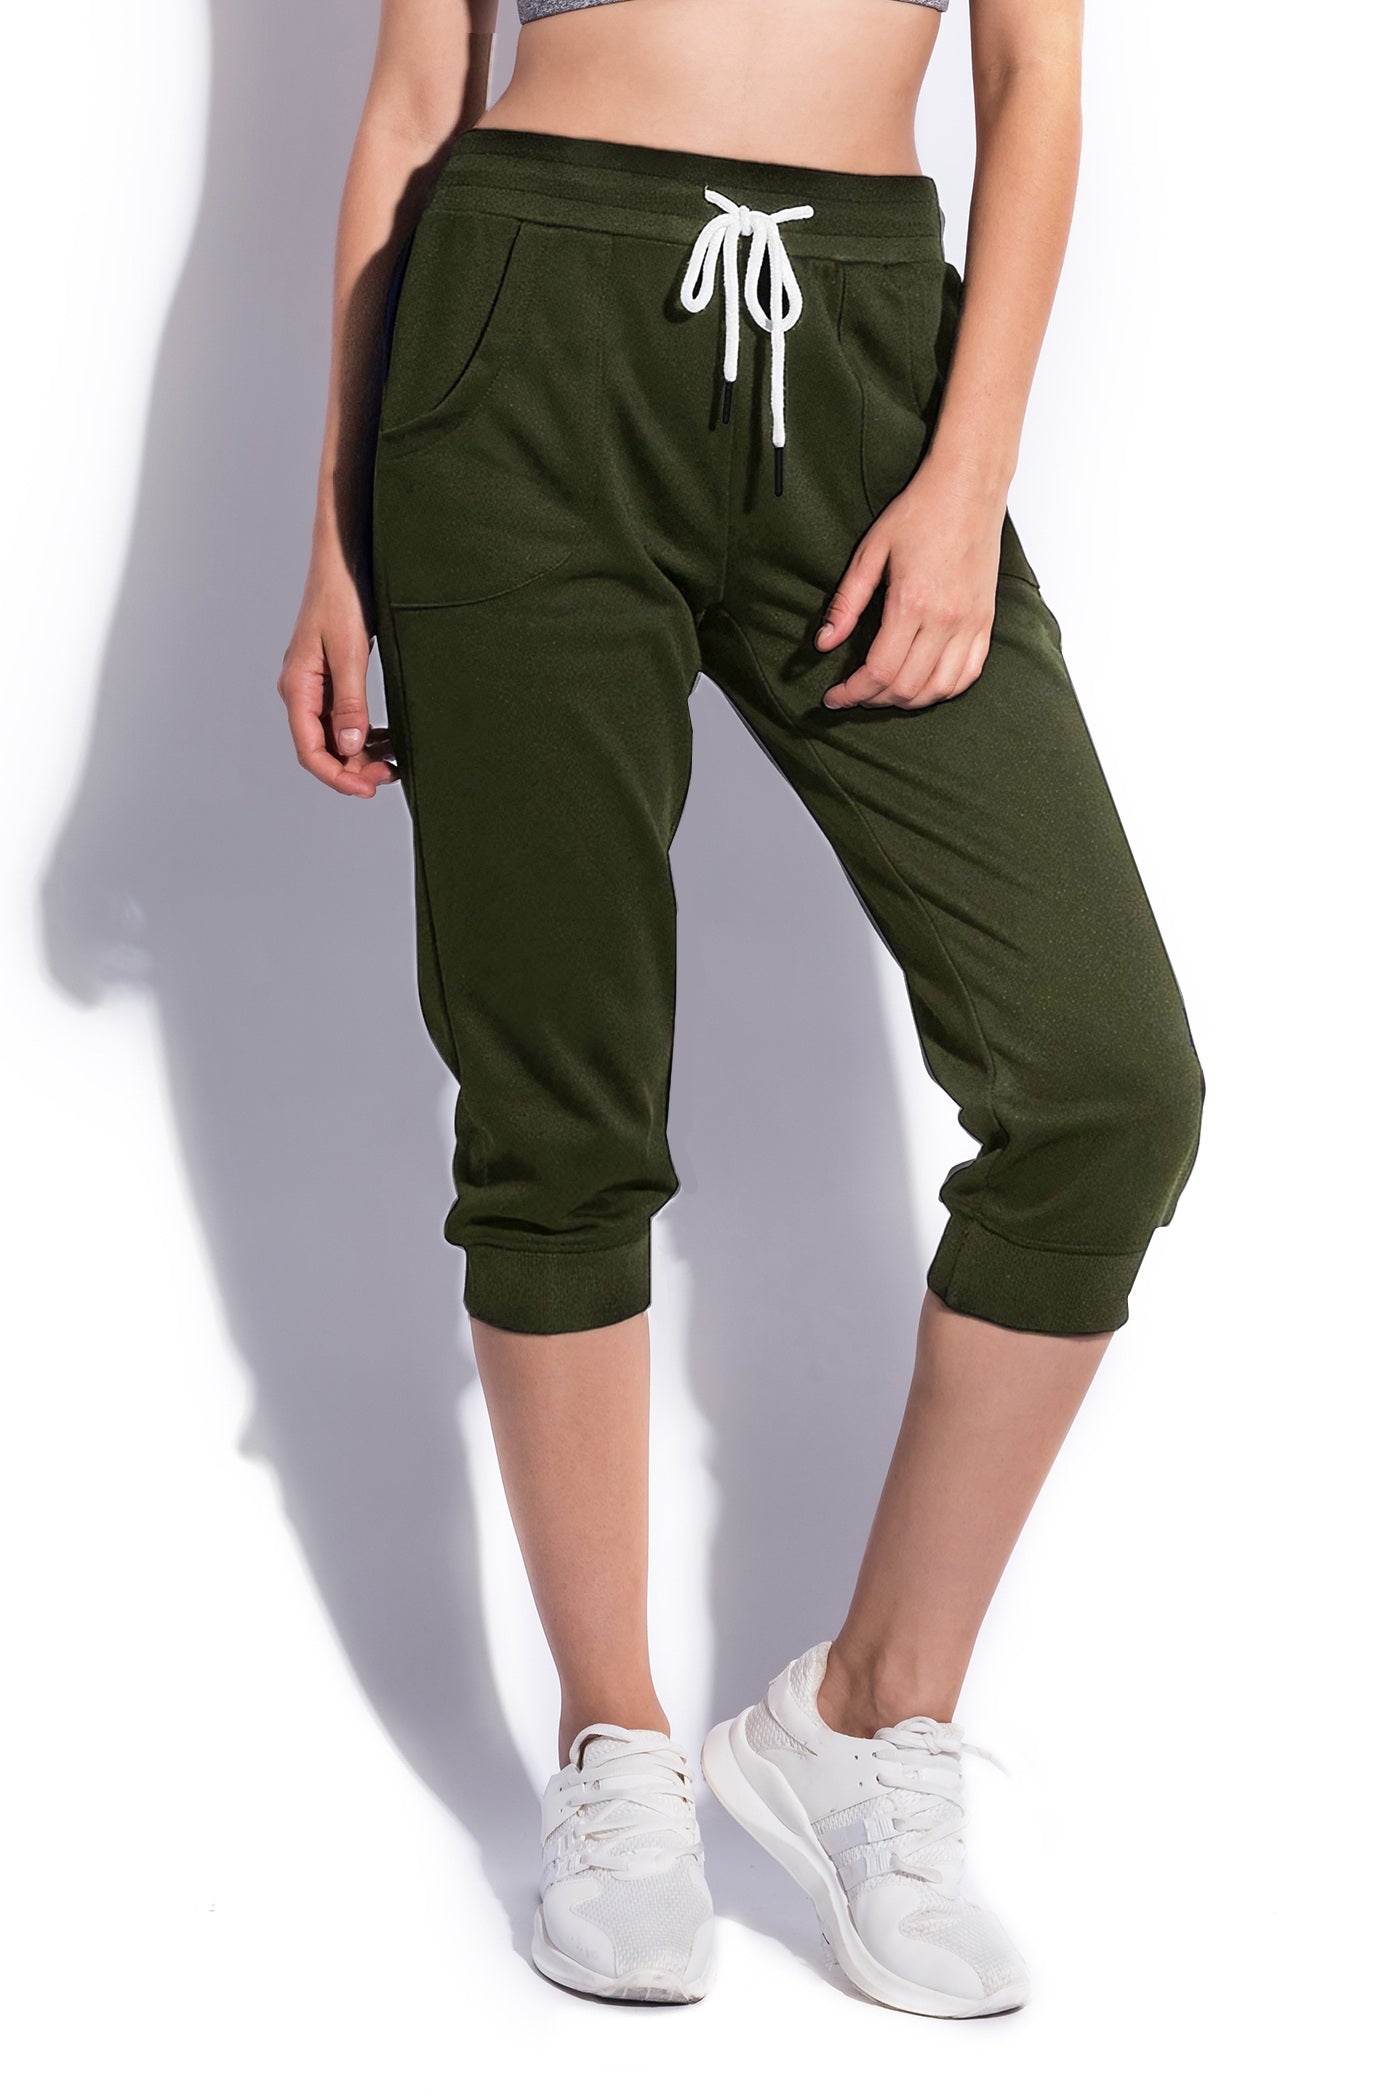 Weintee Women's Capri Joggers Jersey Sweatpants M Army Green : Clothing,  Shoes & Jewelry 